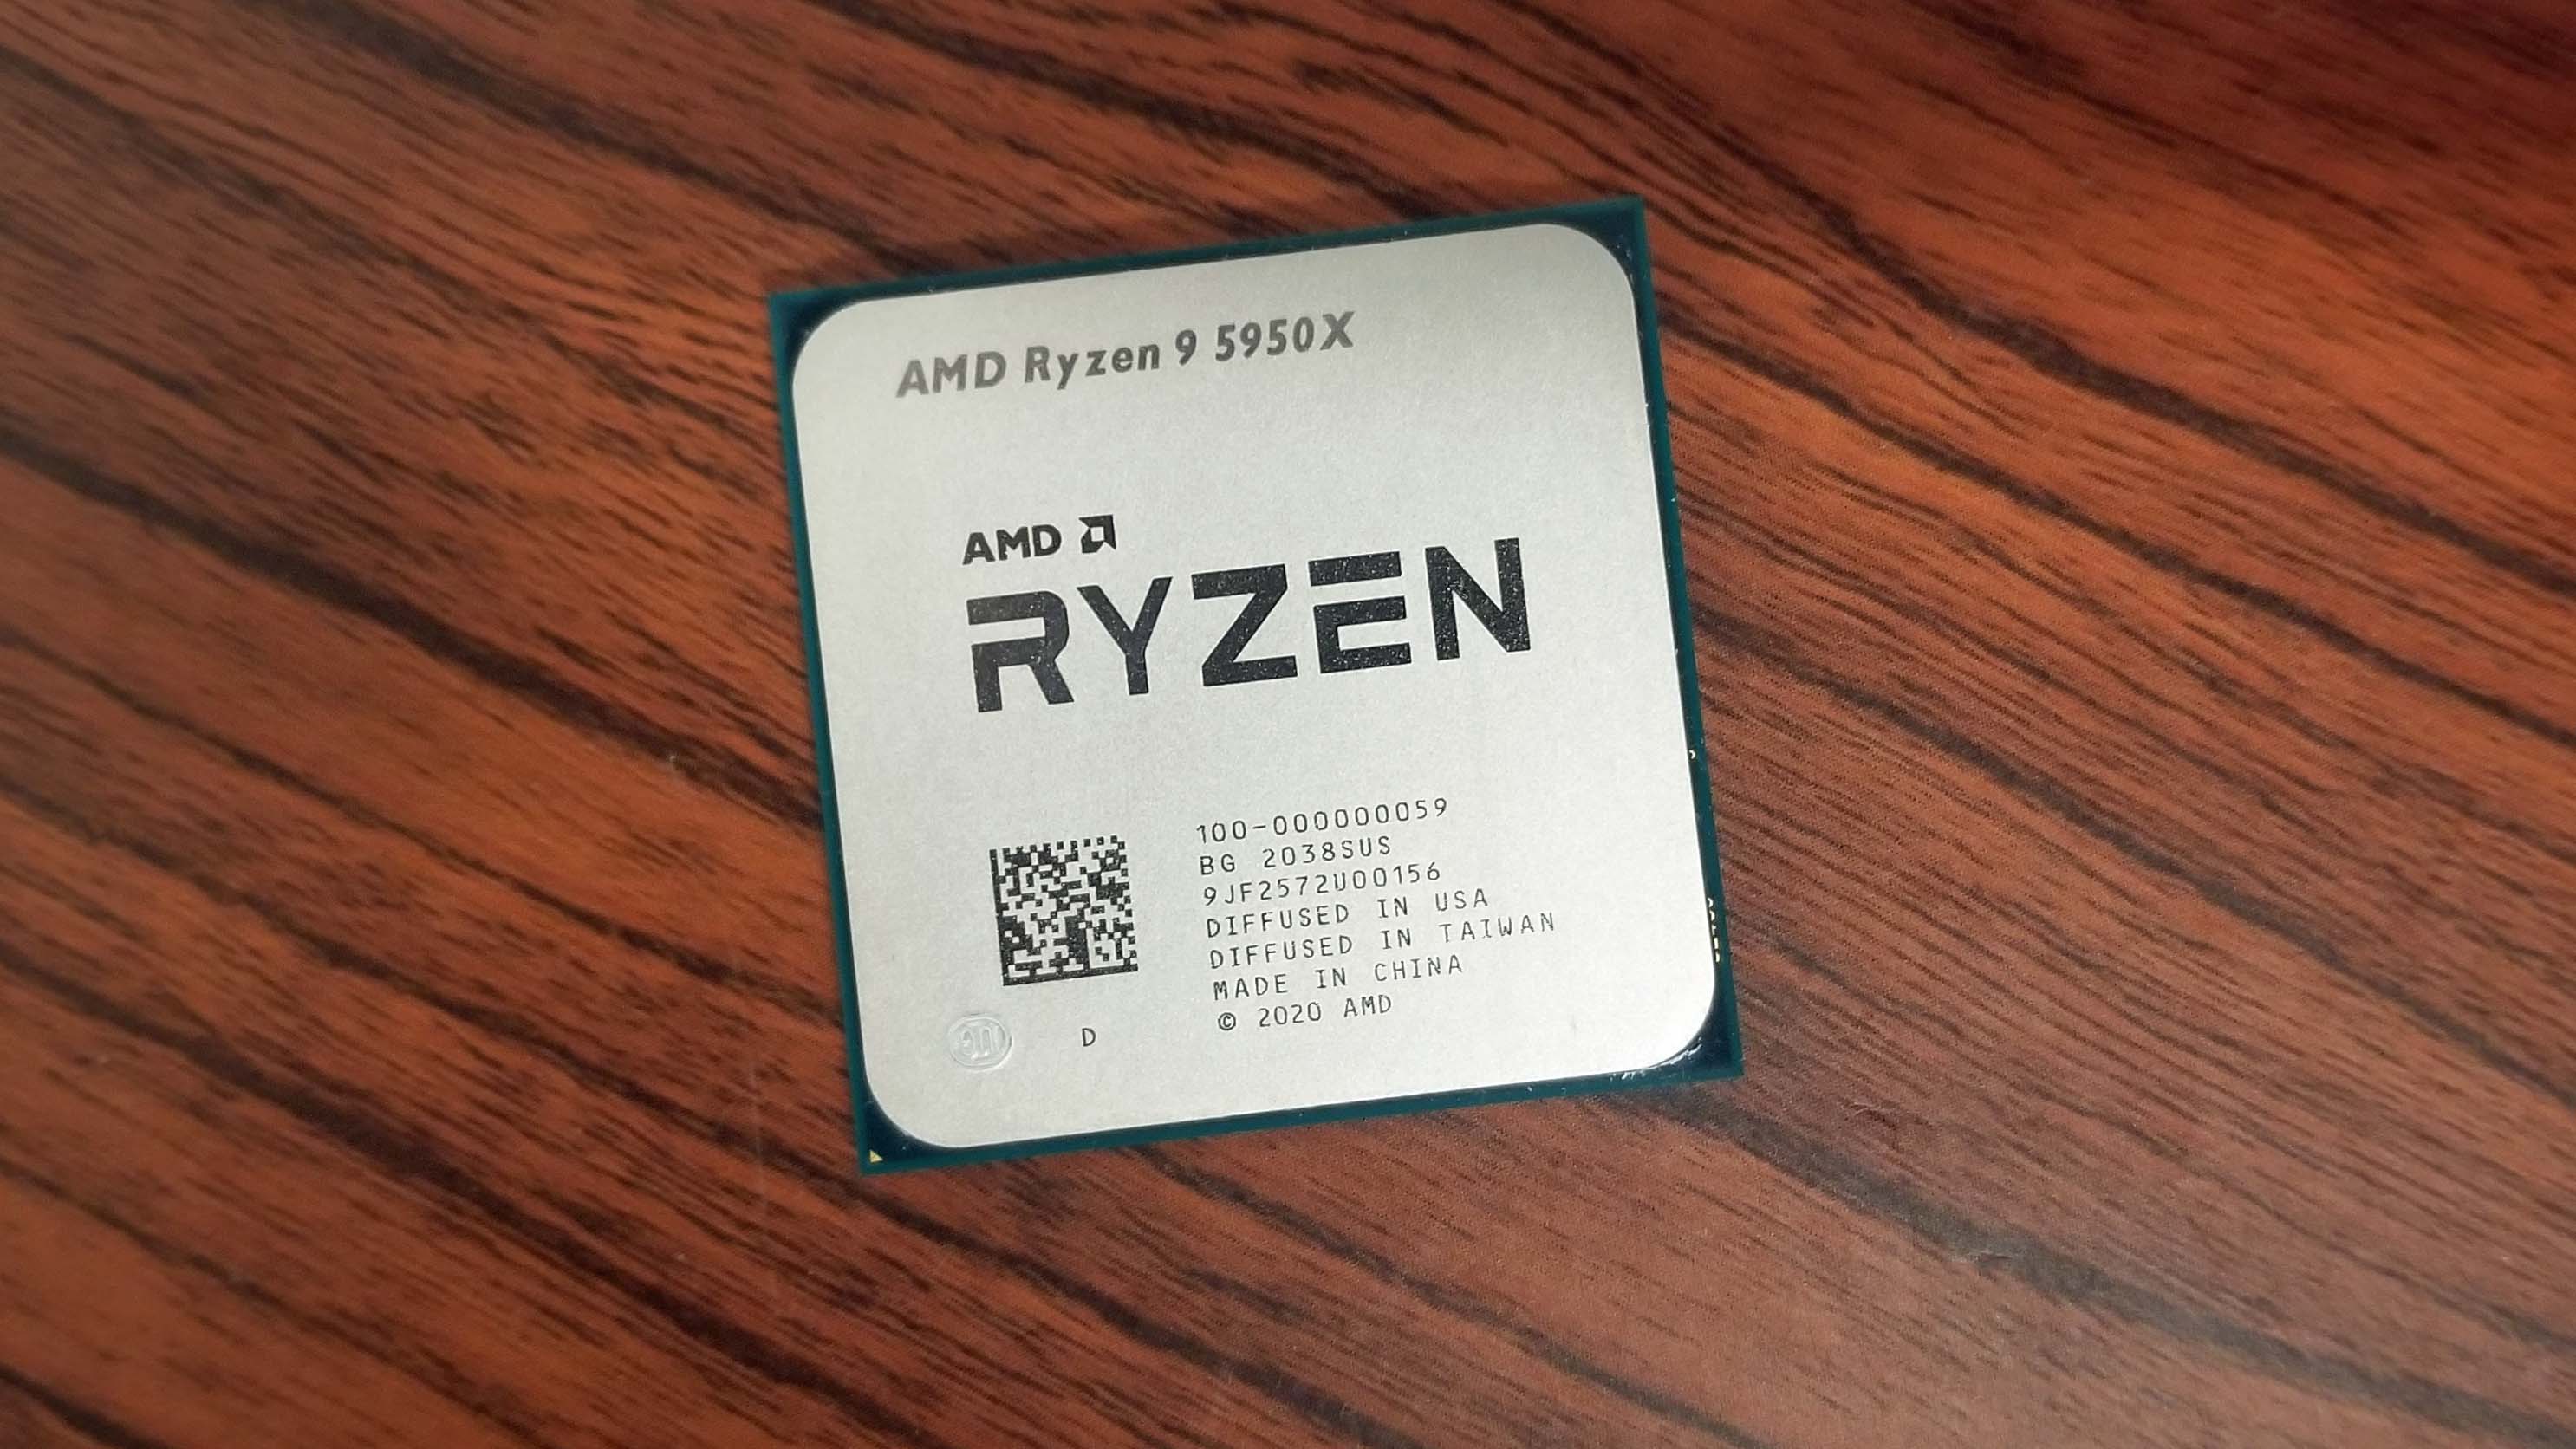 AMD Ryzen 9 5950X and Ryzen 9 5900X Power Consumption, Efficiency